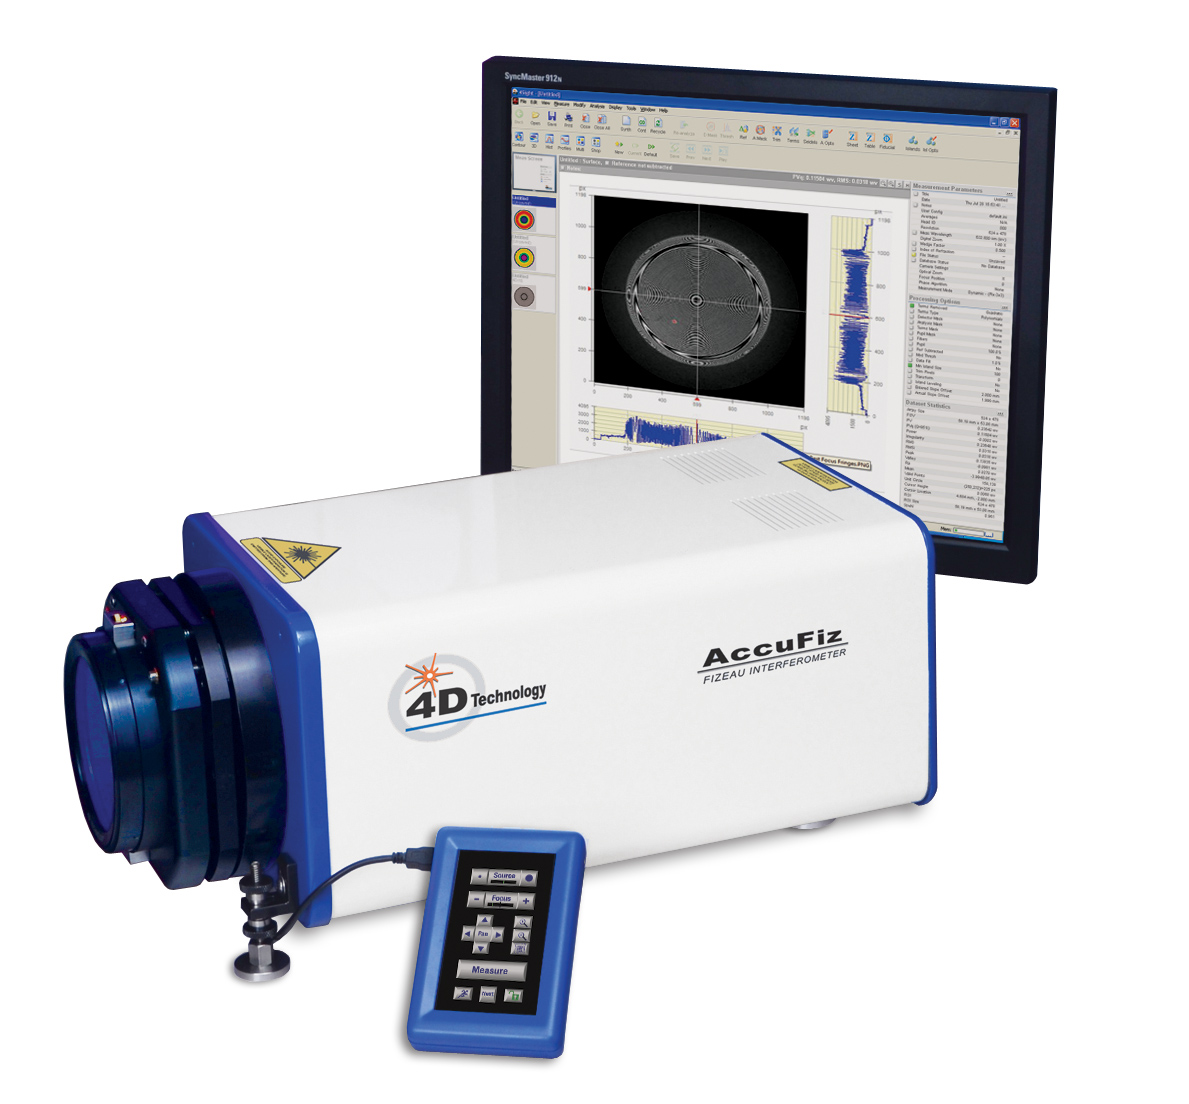 AccuFiz Fizeau Interferometer in horizontal mounting application